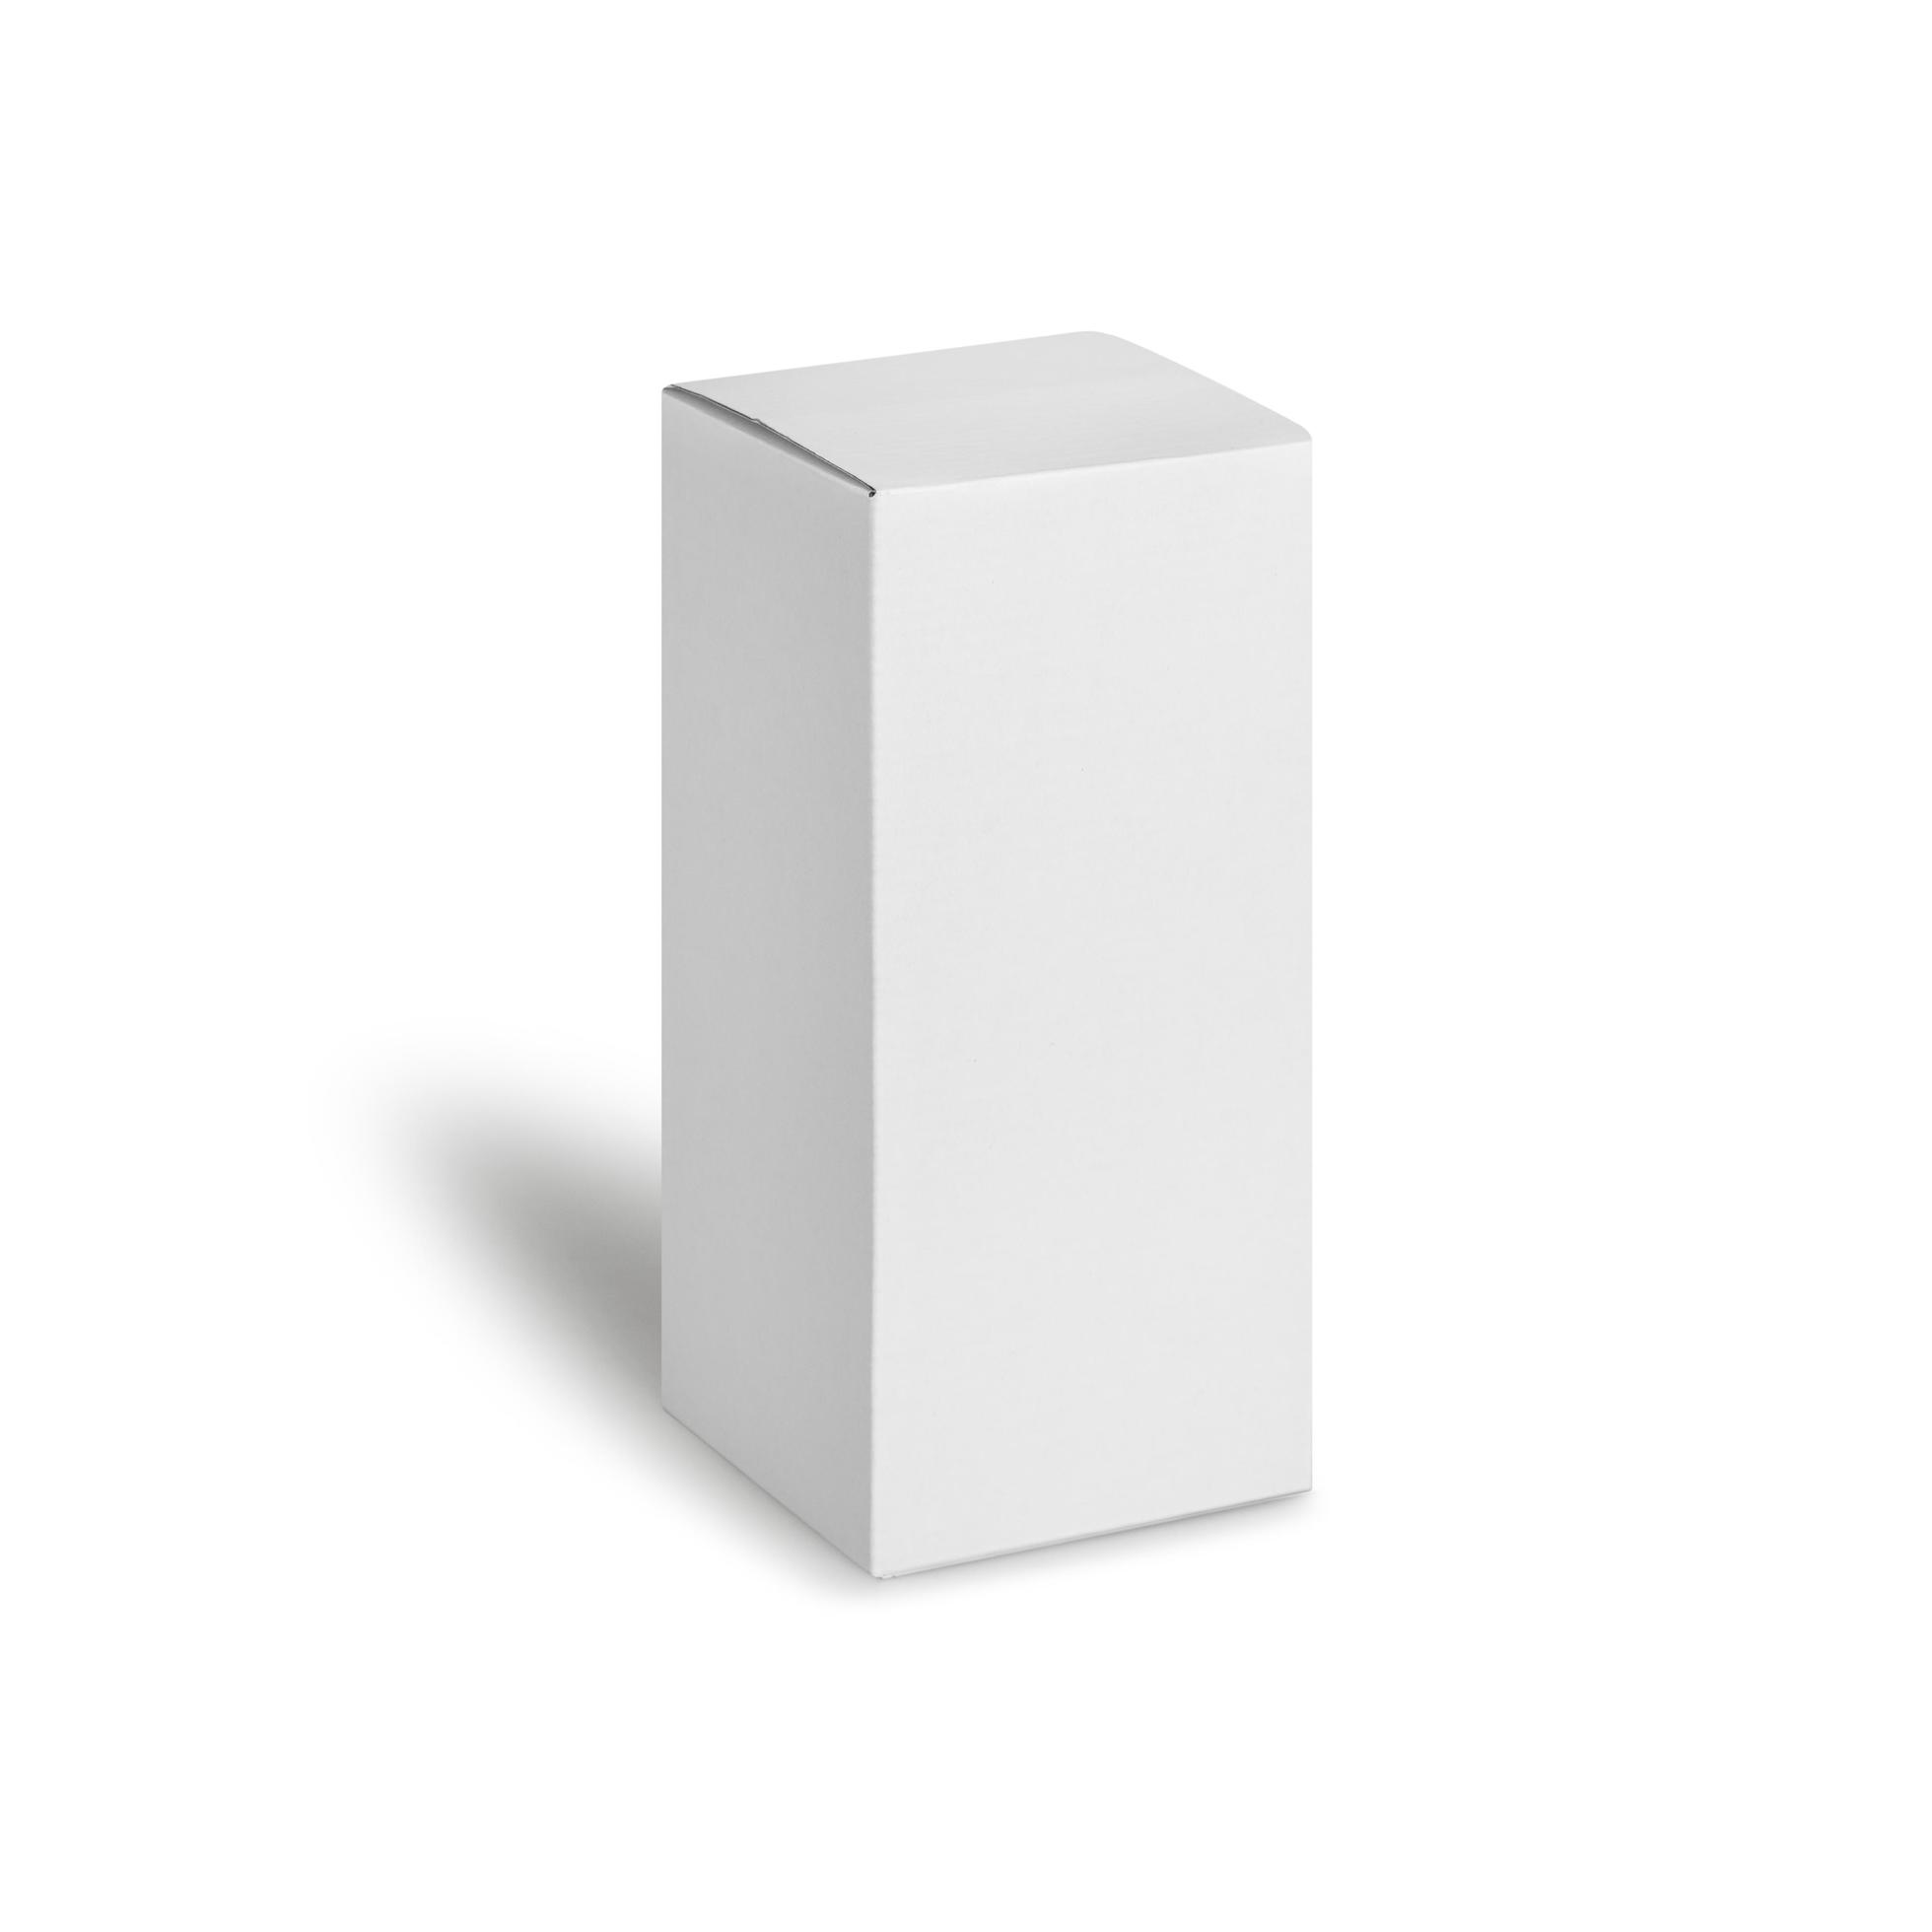 caja blanca aislada sobre fondo blanco 1343719 Foto de stock en Vecteezy